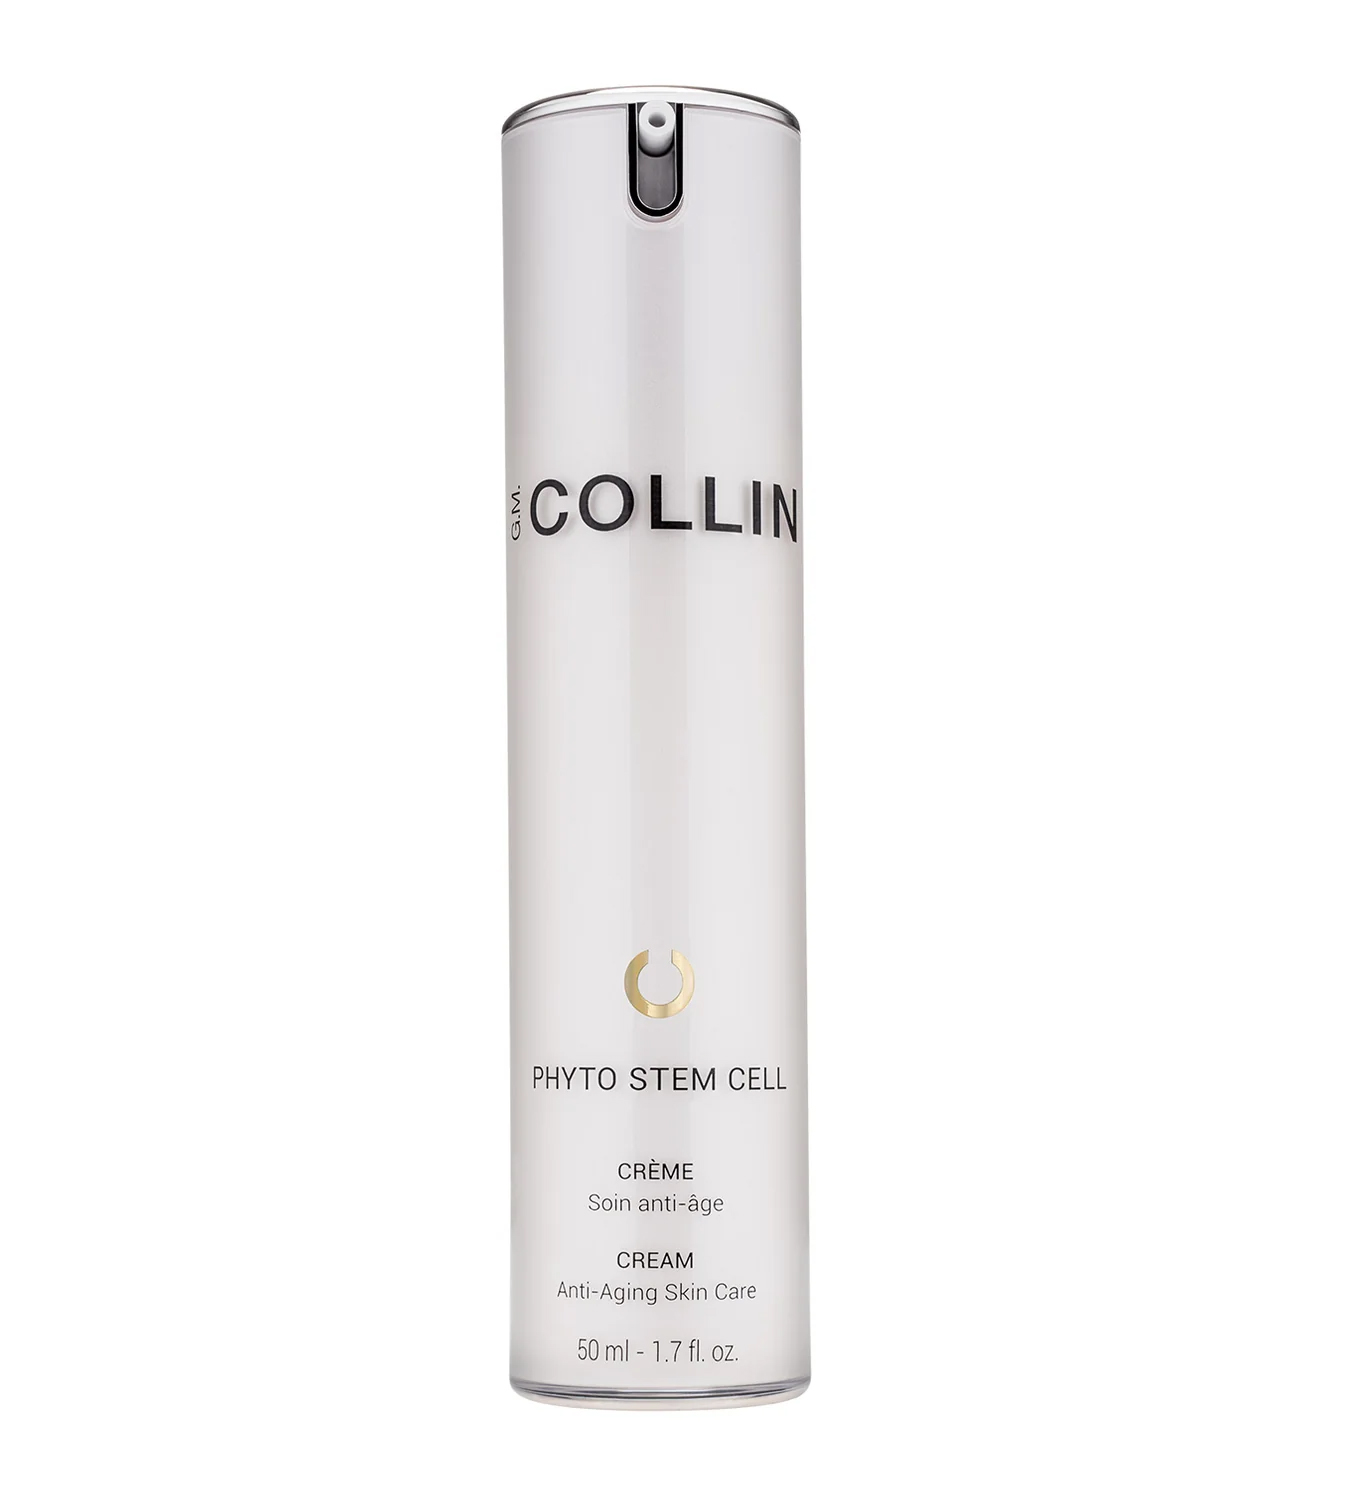 GM Collin Phyto Stem Cell + Cream - 1.7 oz